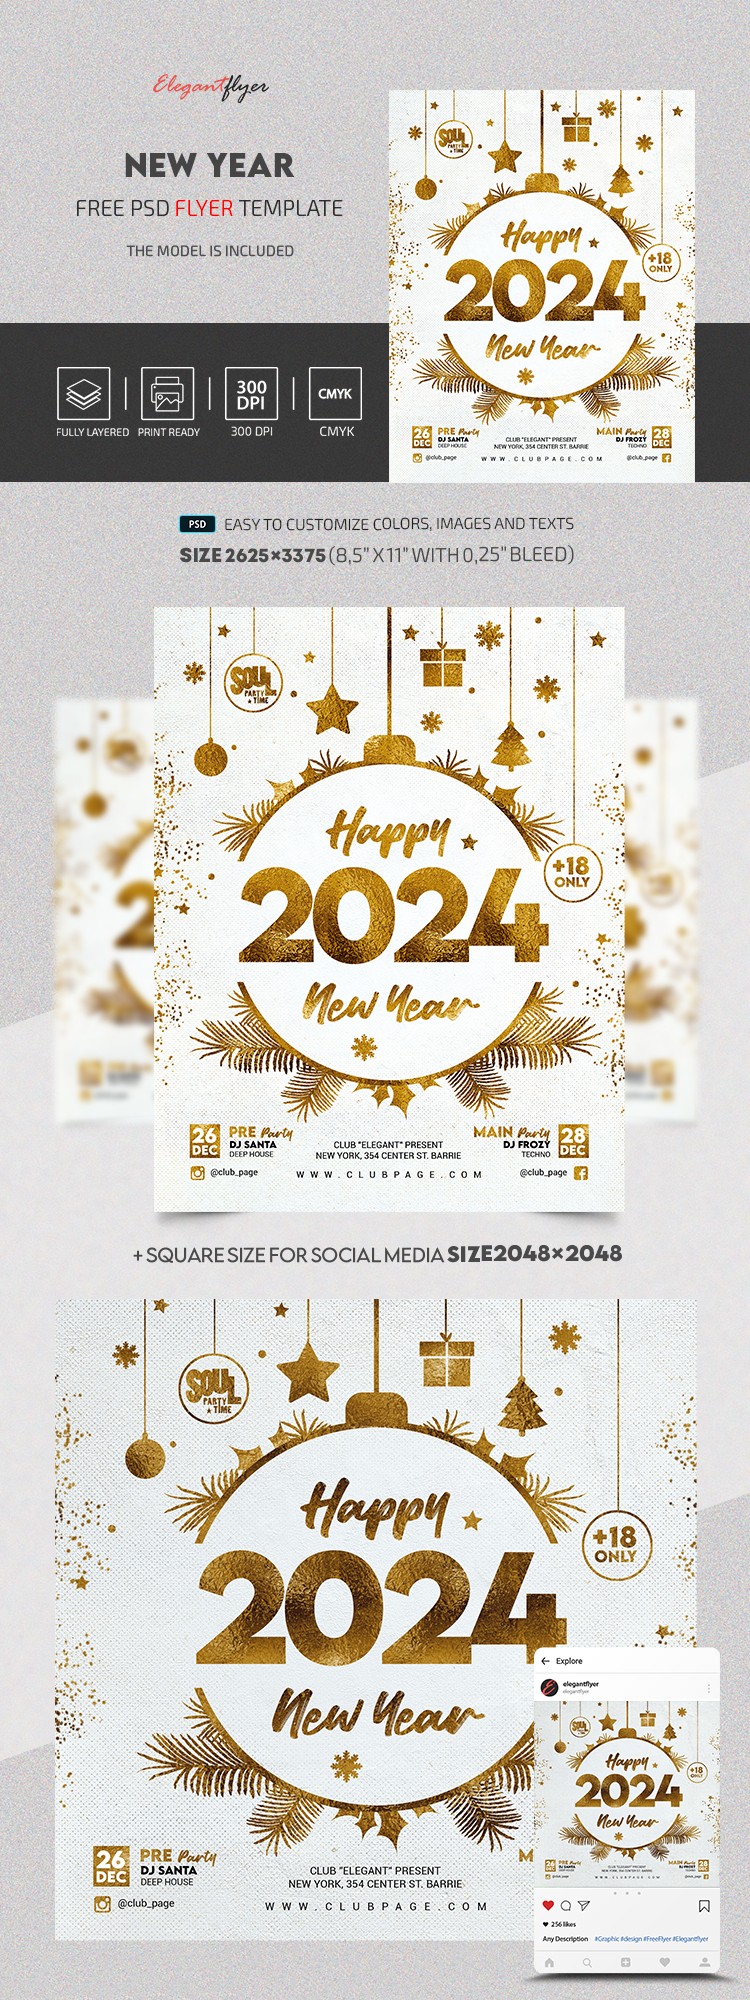 New Year 2024 by ElegantFlyer